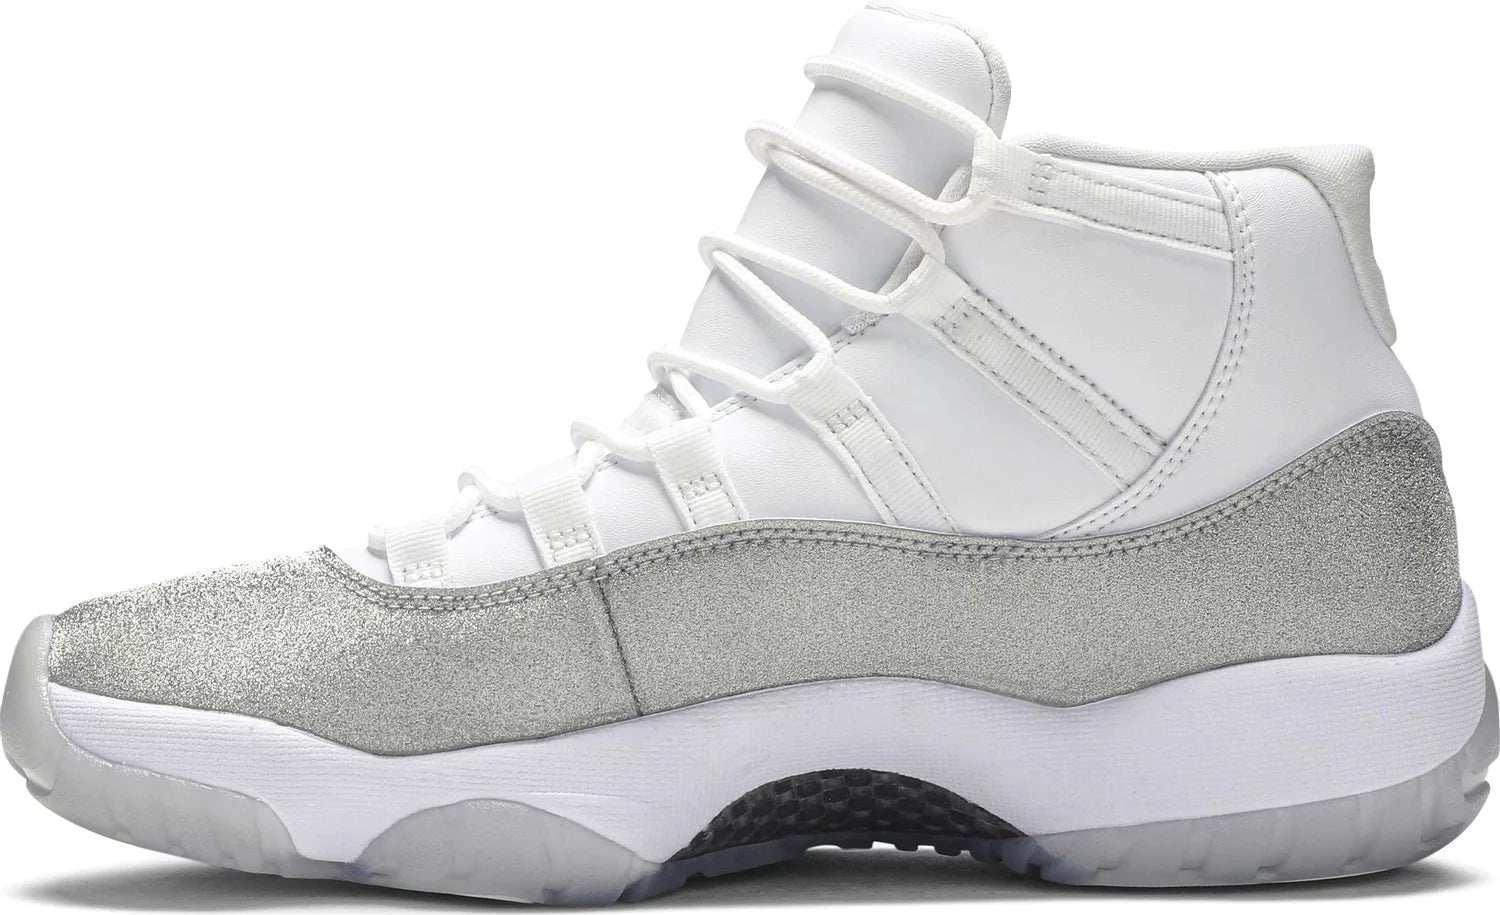 Nike Jordan 11 Retro White Metallic Silver (Women's)